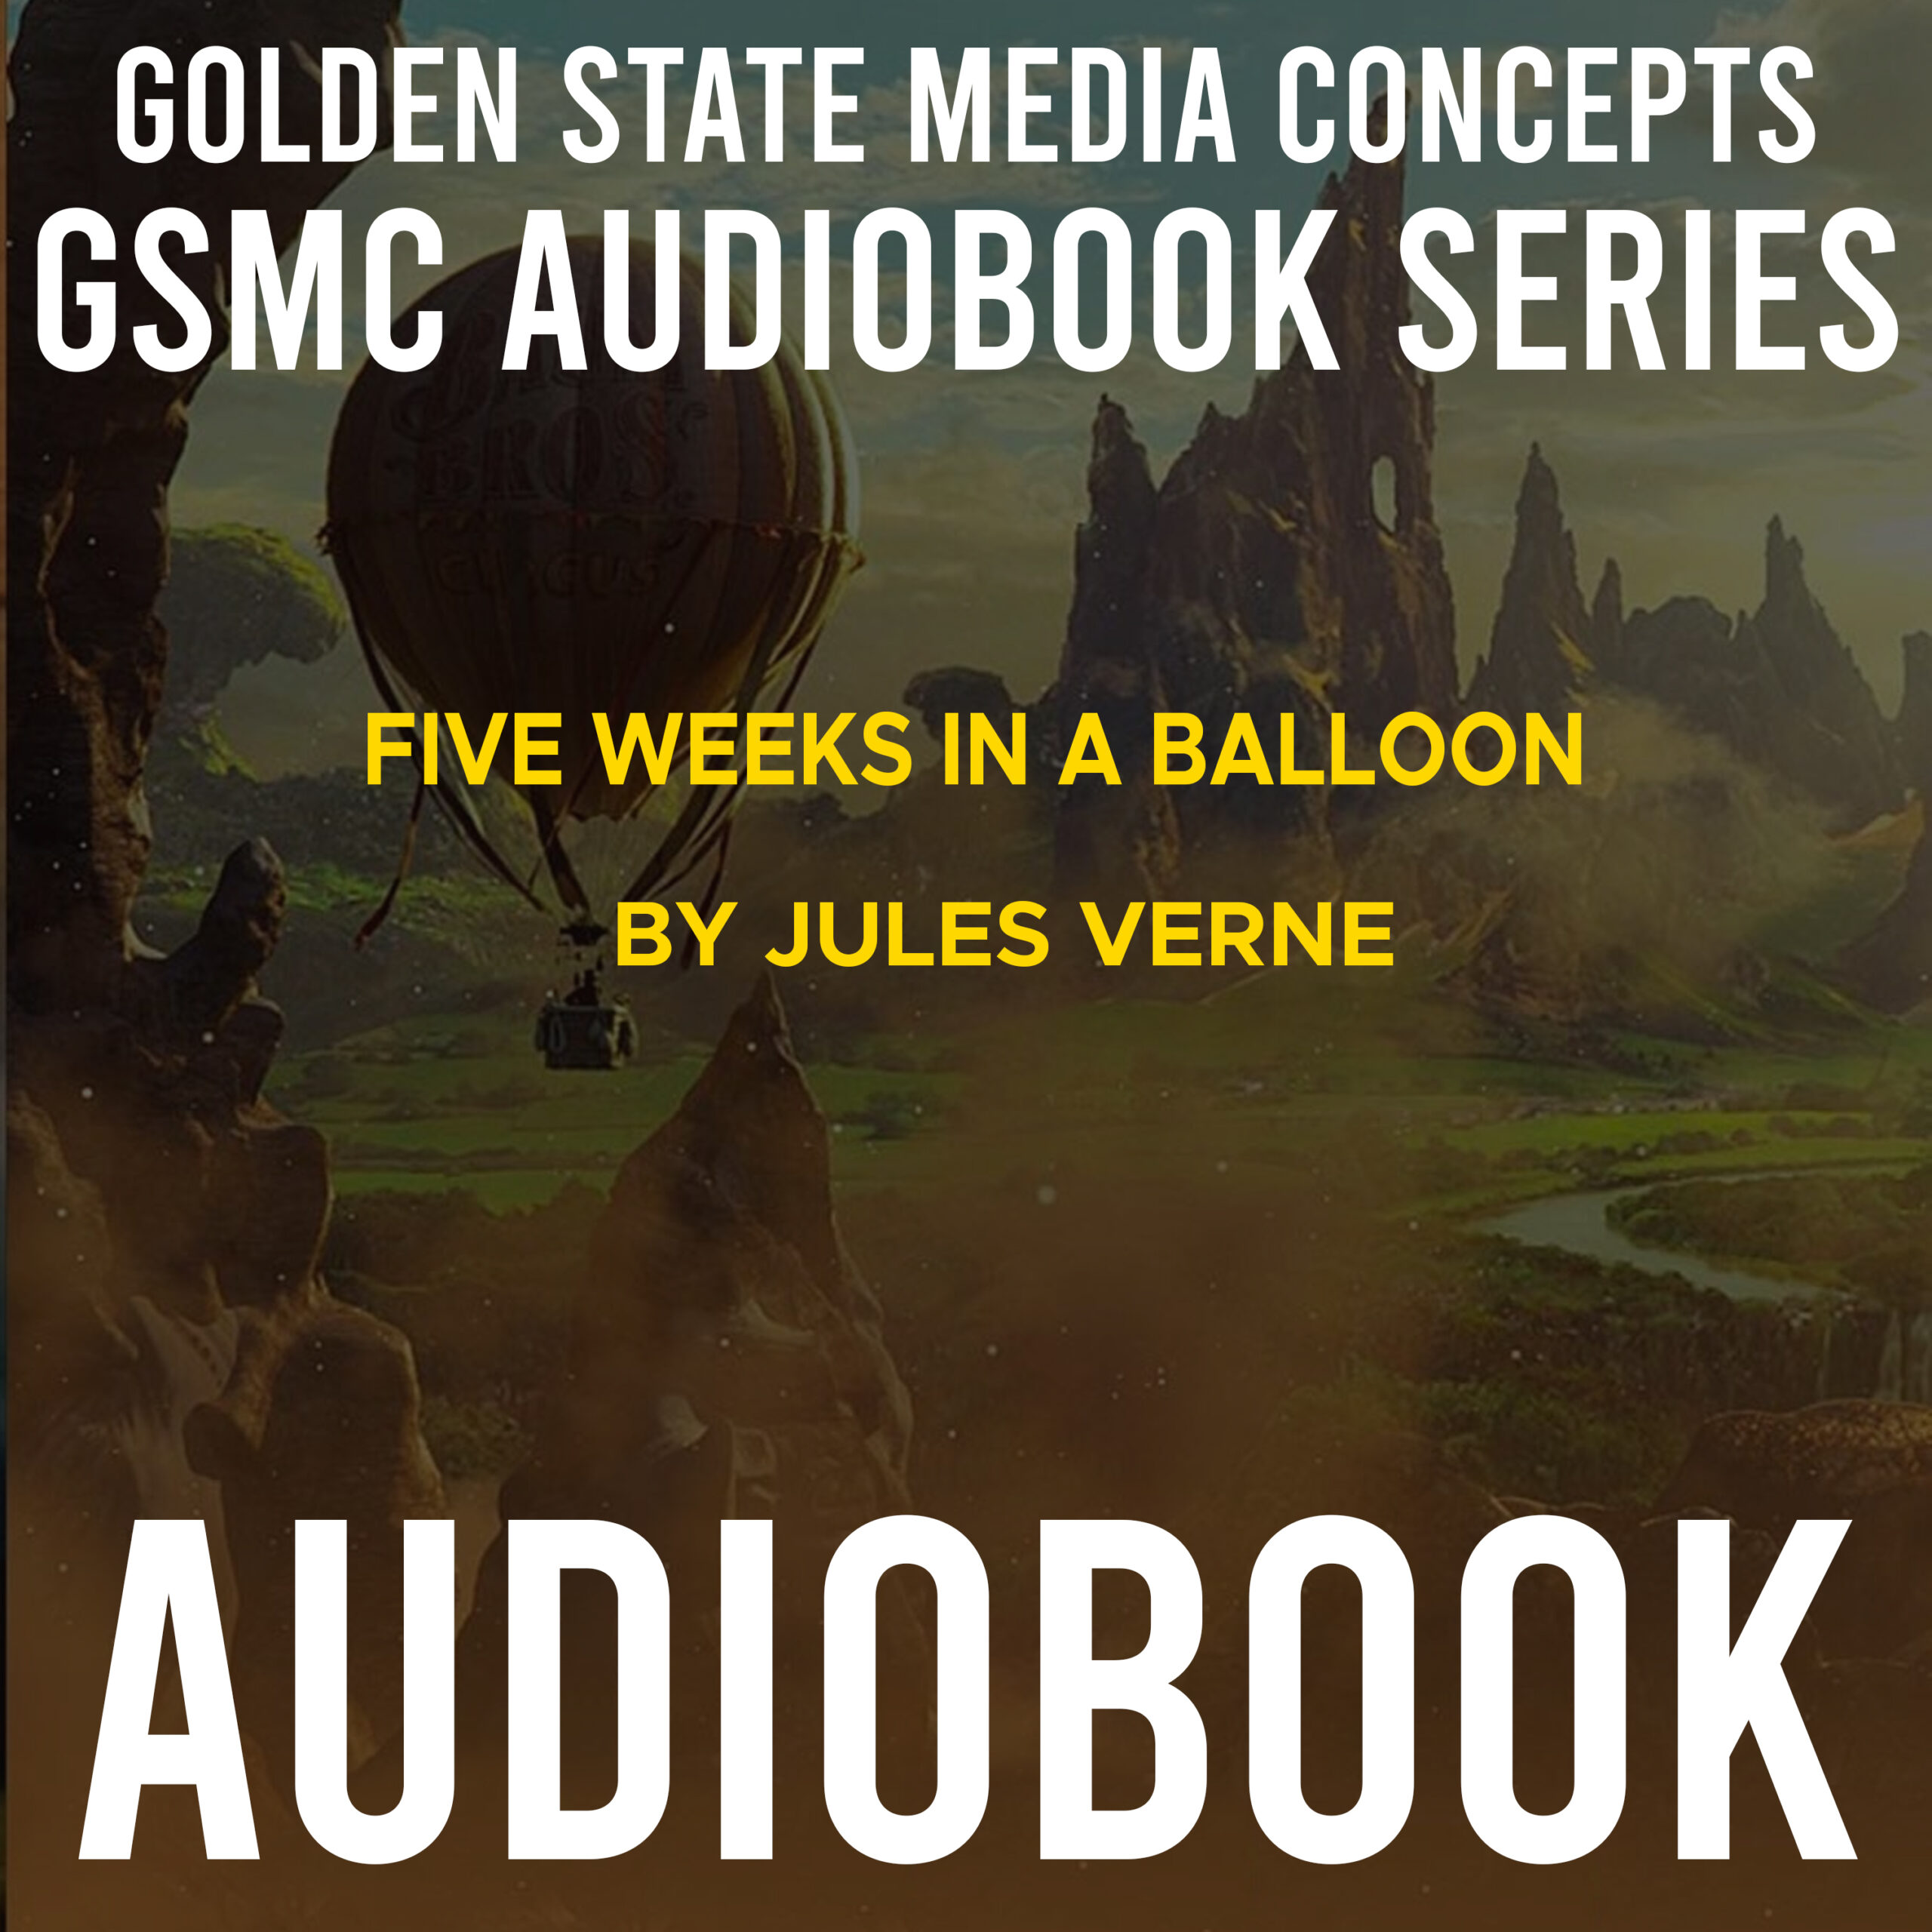 GSMC Audiobook Series: Five Weeks in a Balloon by Jules Verne